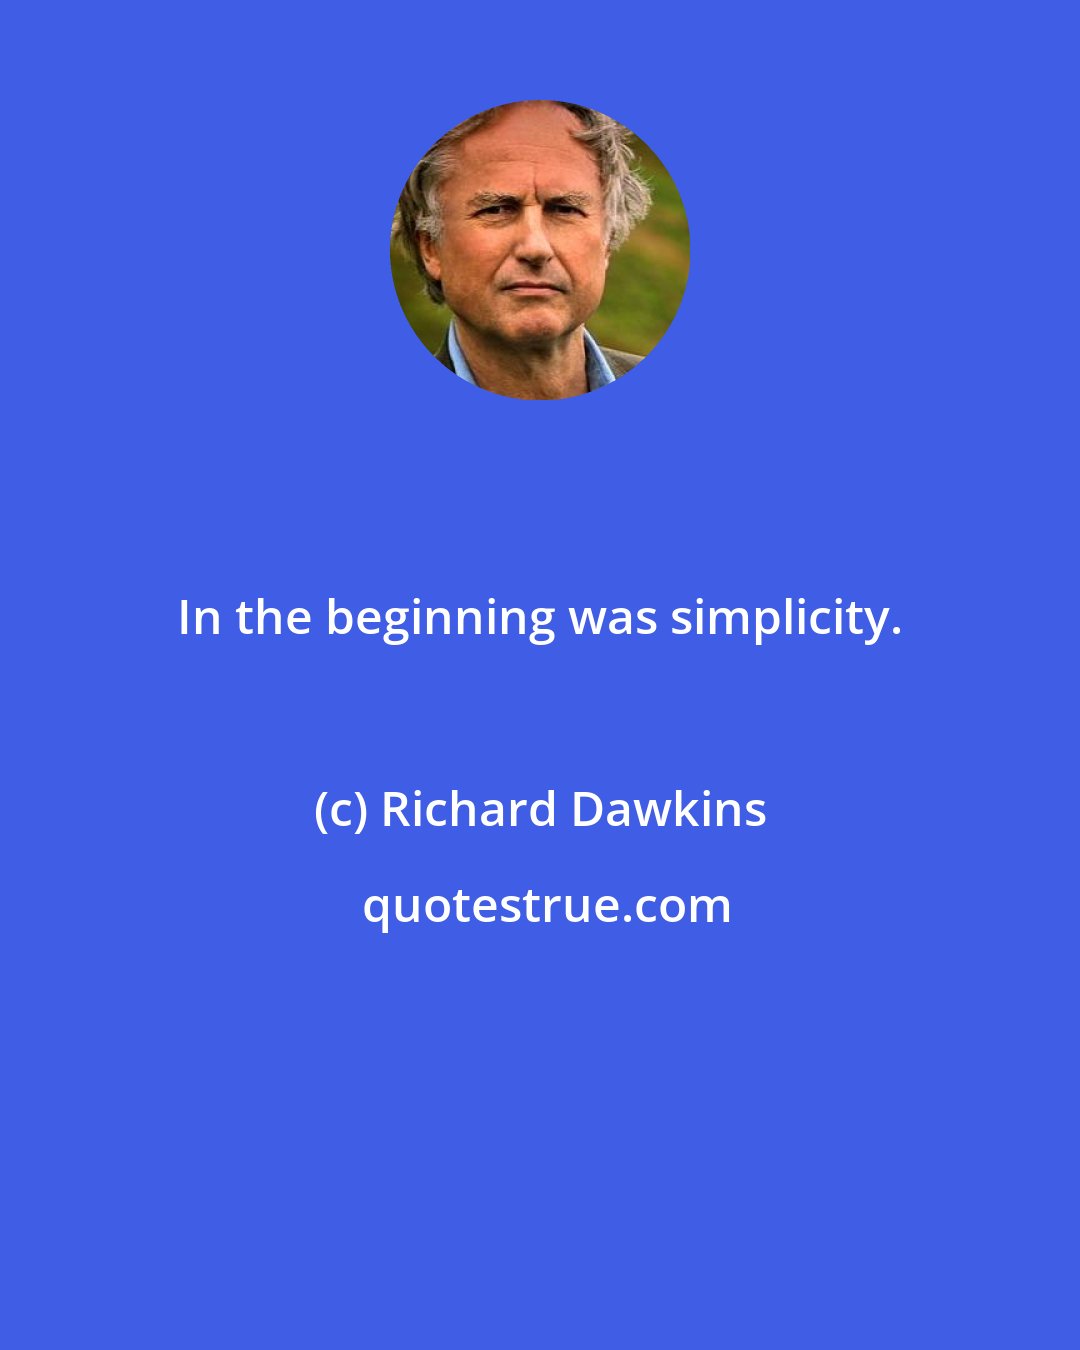 Richard Dawkins: In the beginning was simplicity.